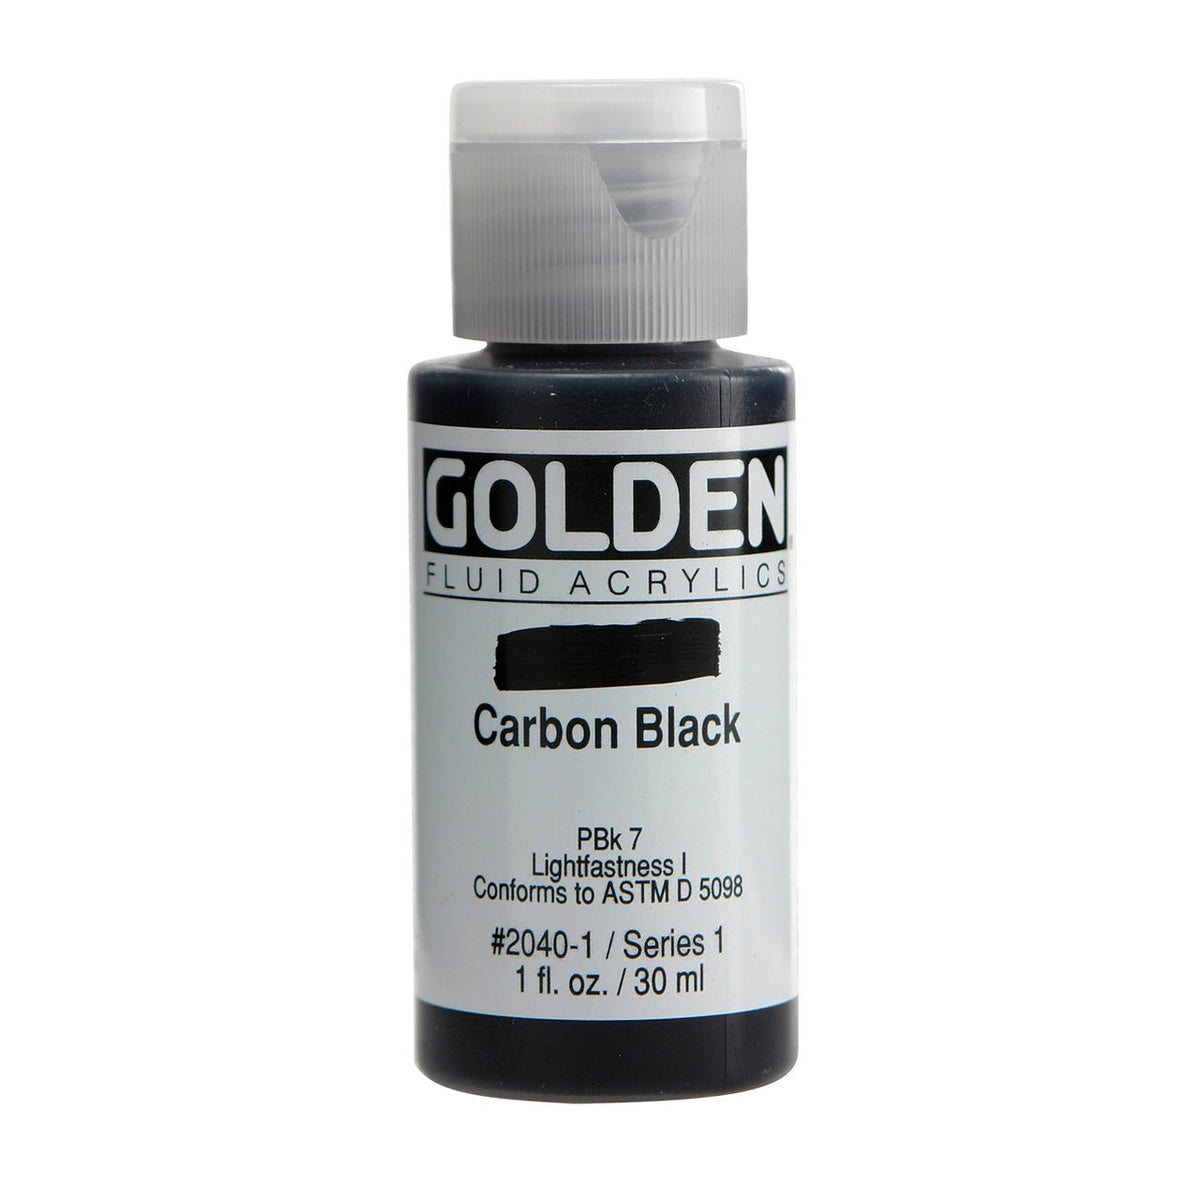 Golden Fluid Acrylic Carbon Black 1 oz - merriartist.com